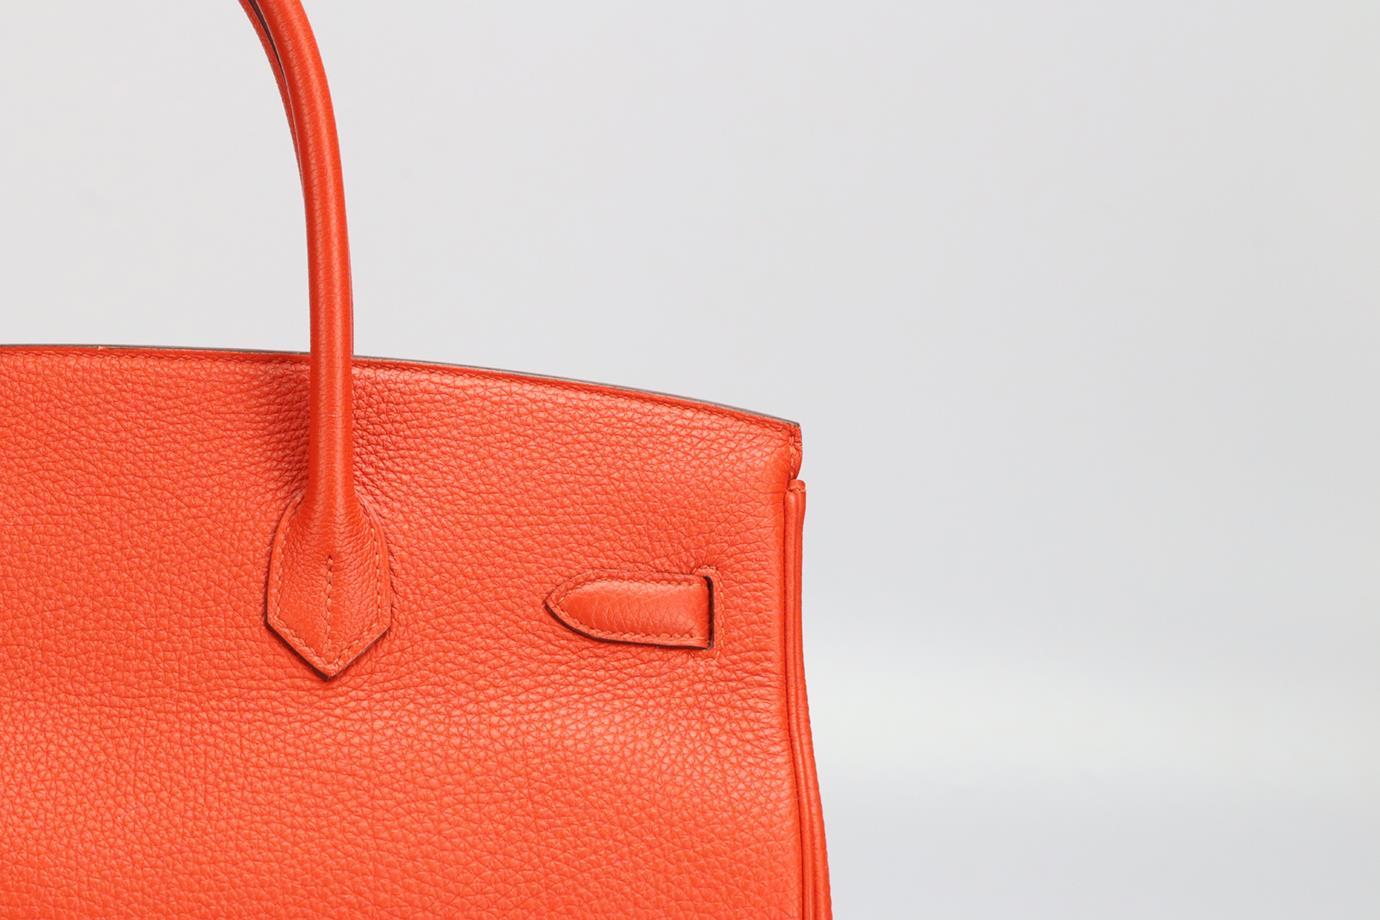 Hermès 2013 Birkin 35cm Togo Leather Bag For Sale 2